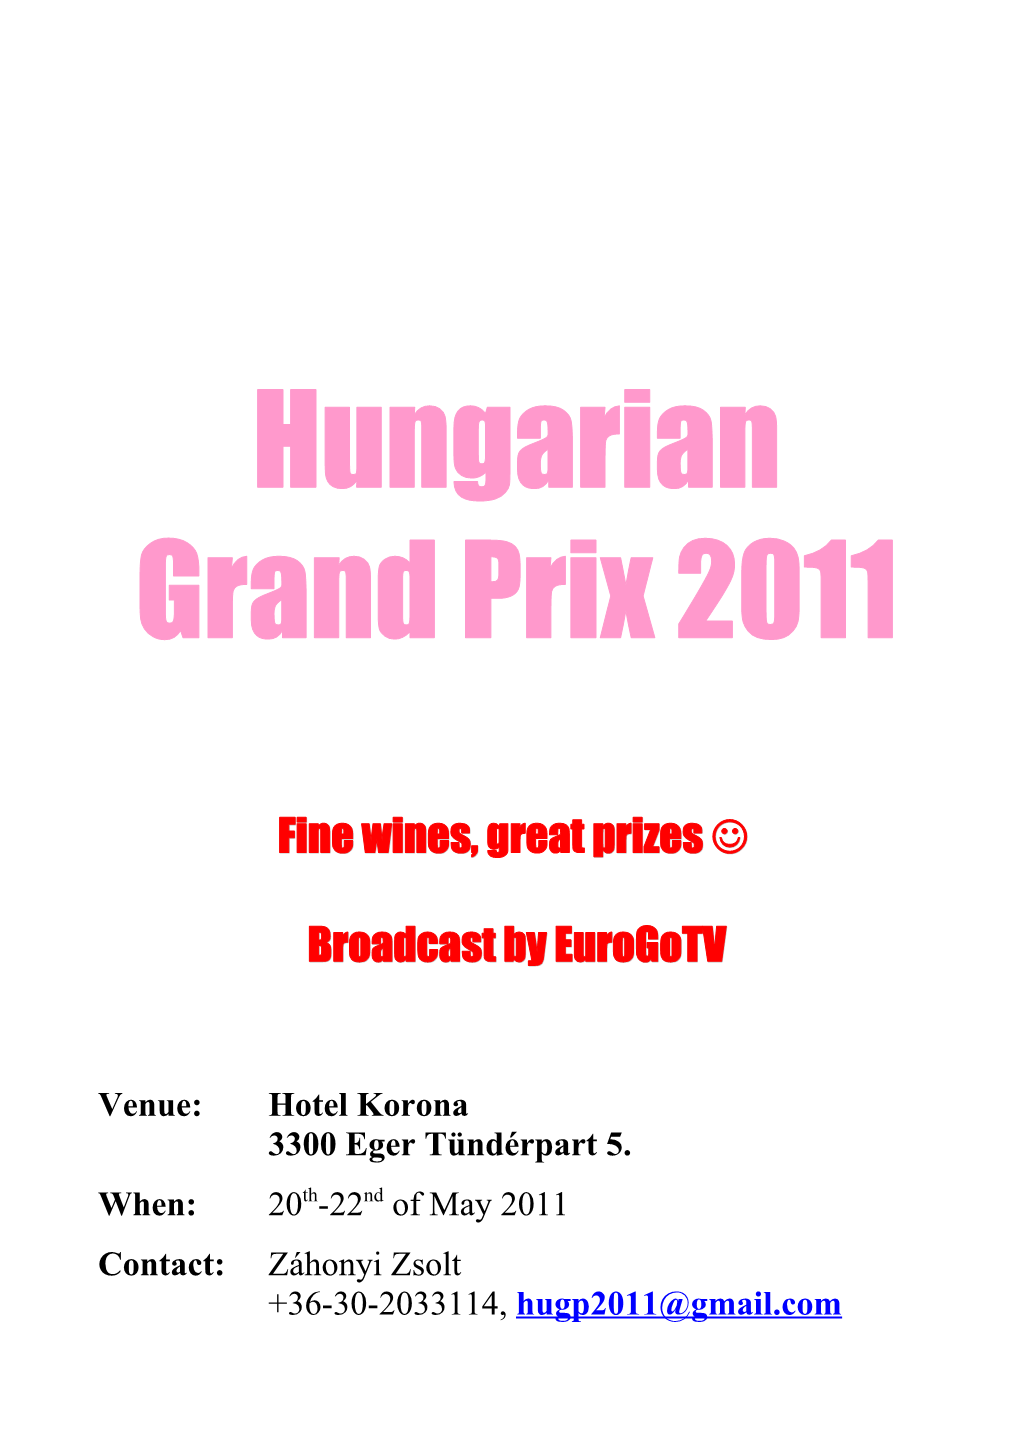 Hungarian Grand Prix 2011